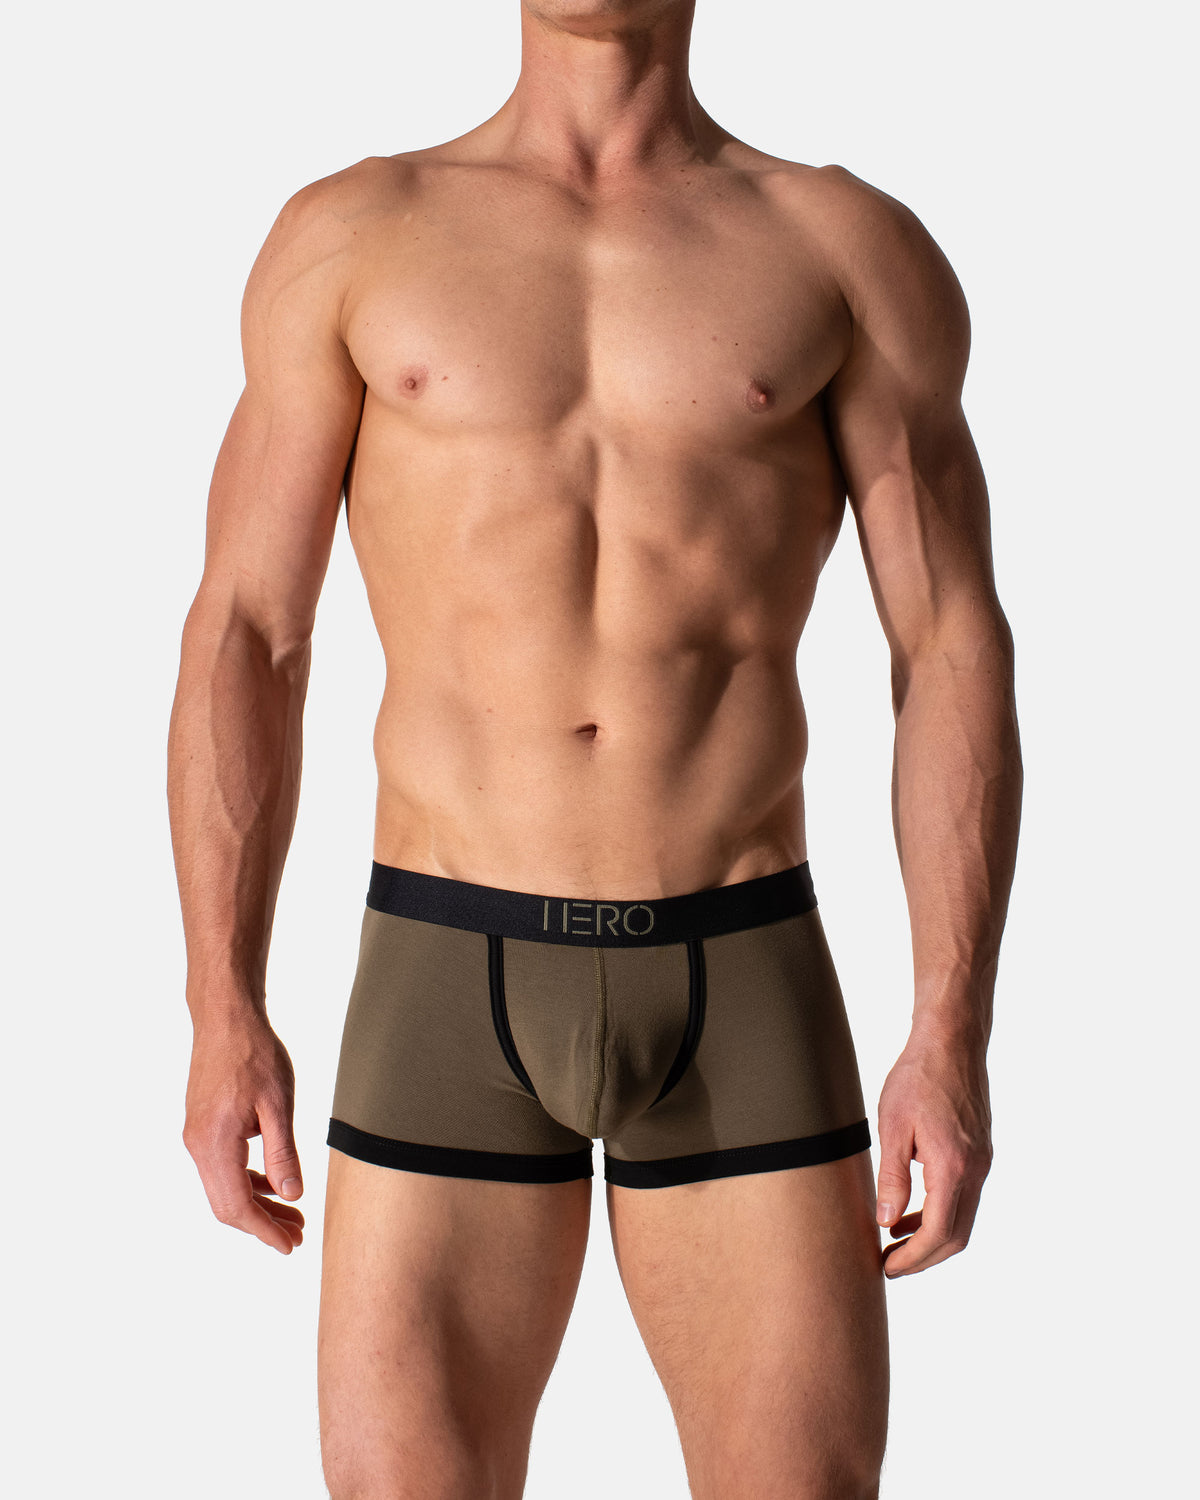 Buy Mens Mesh Underwear Online in Australia - Daily Jocks